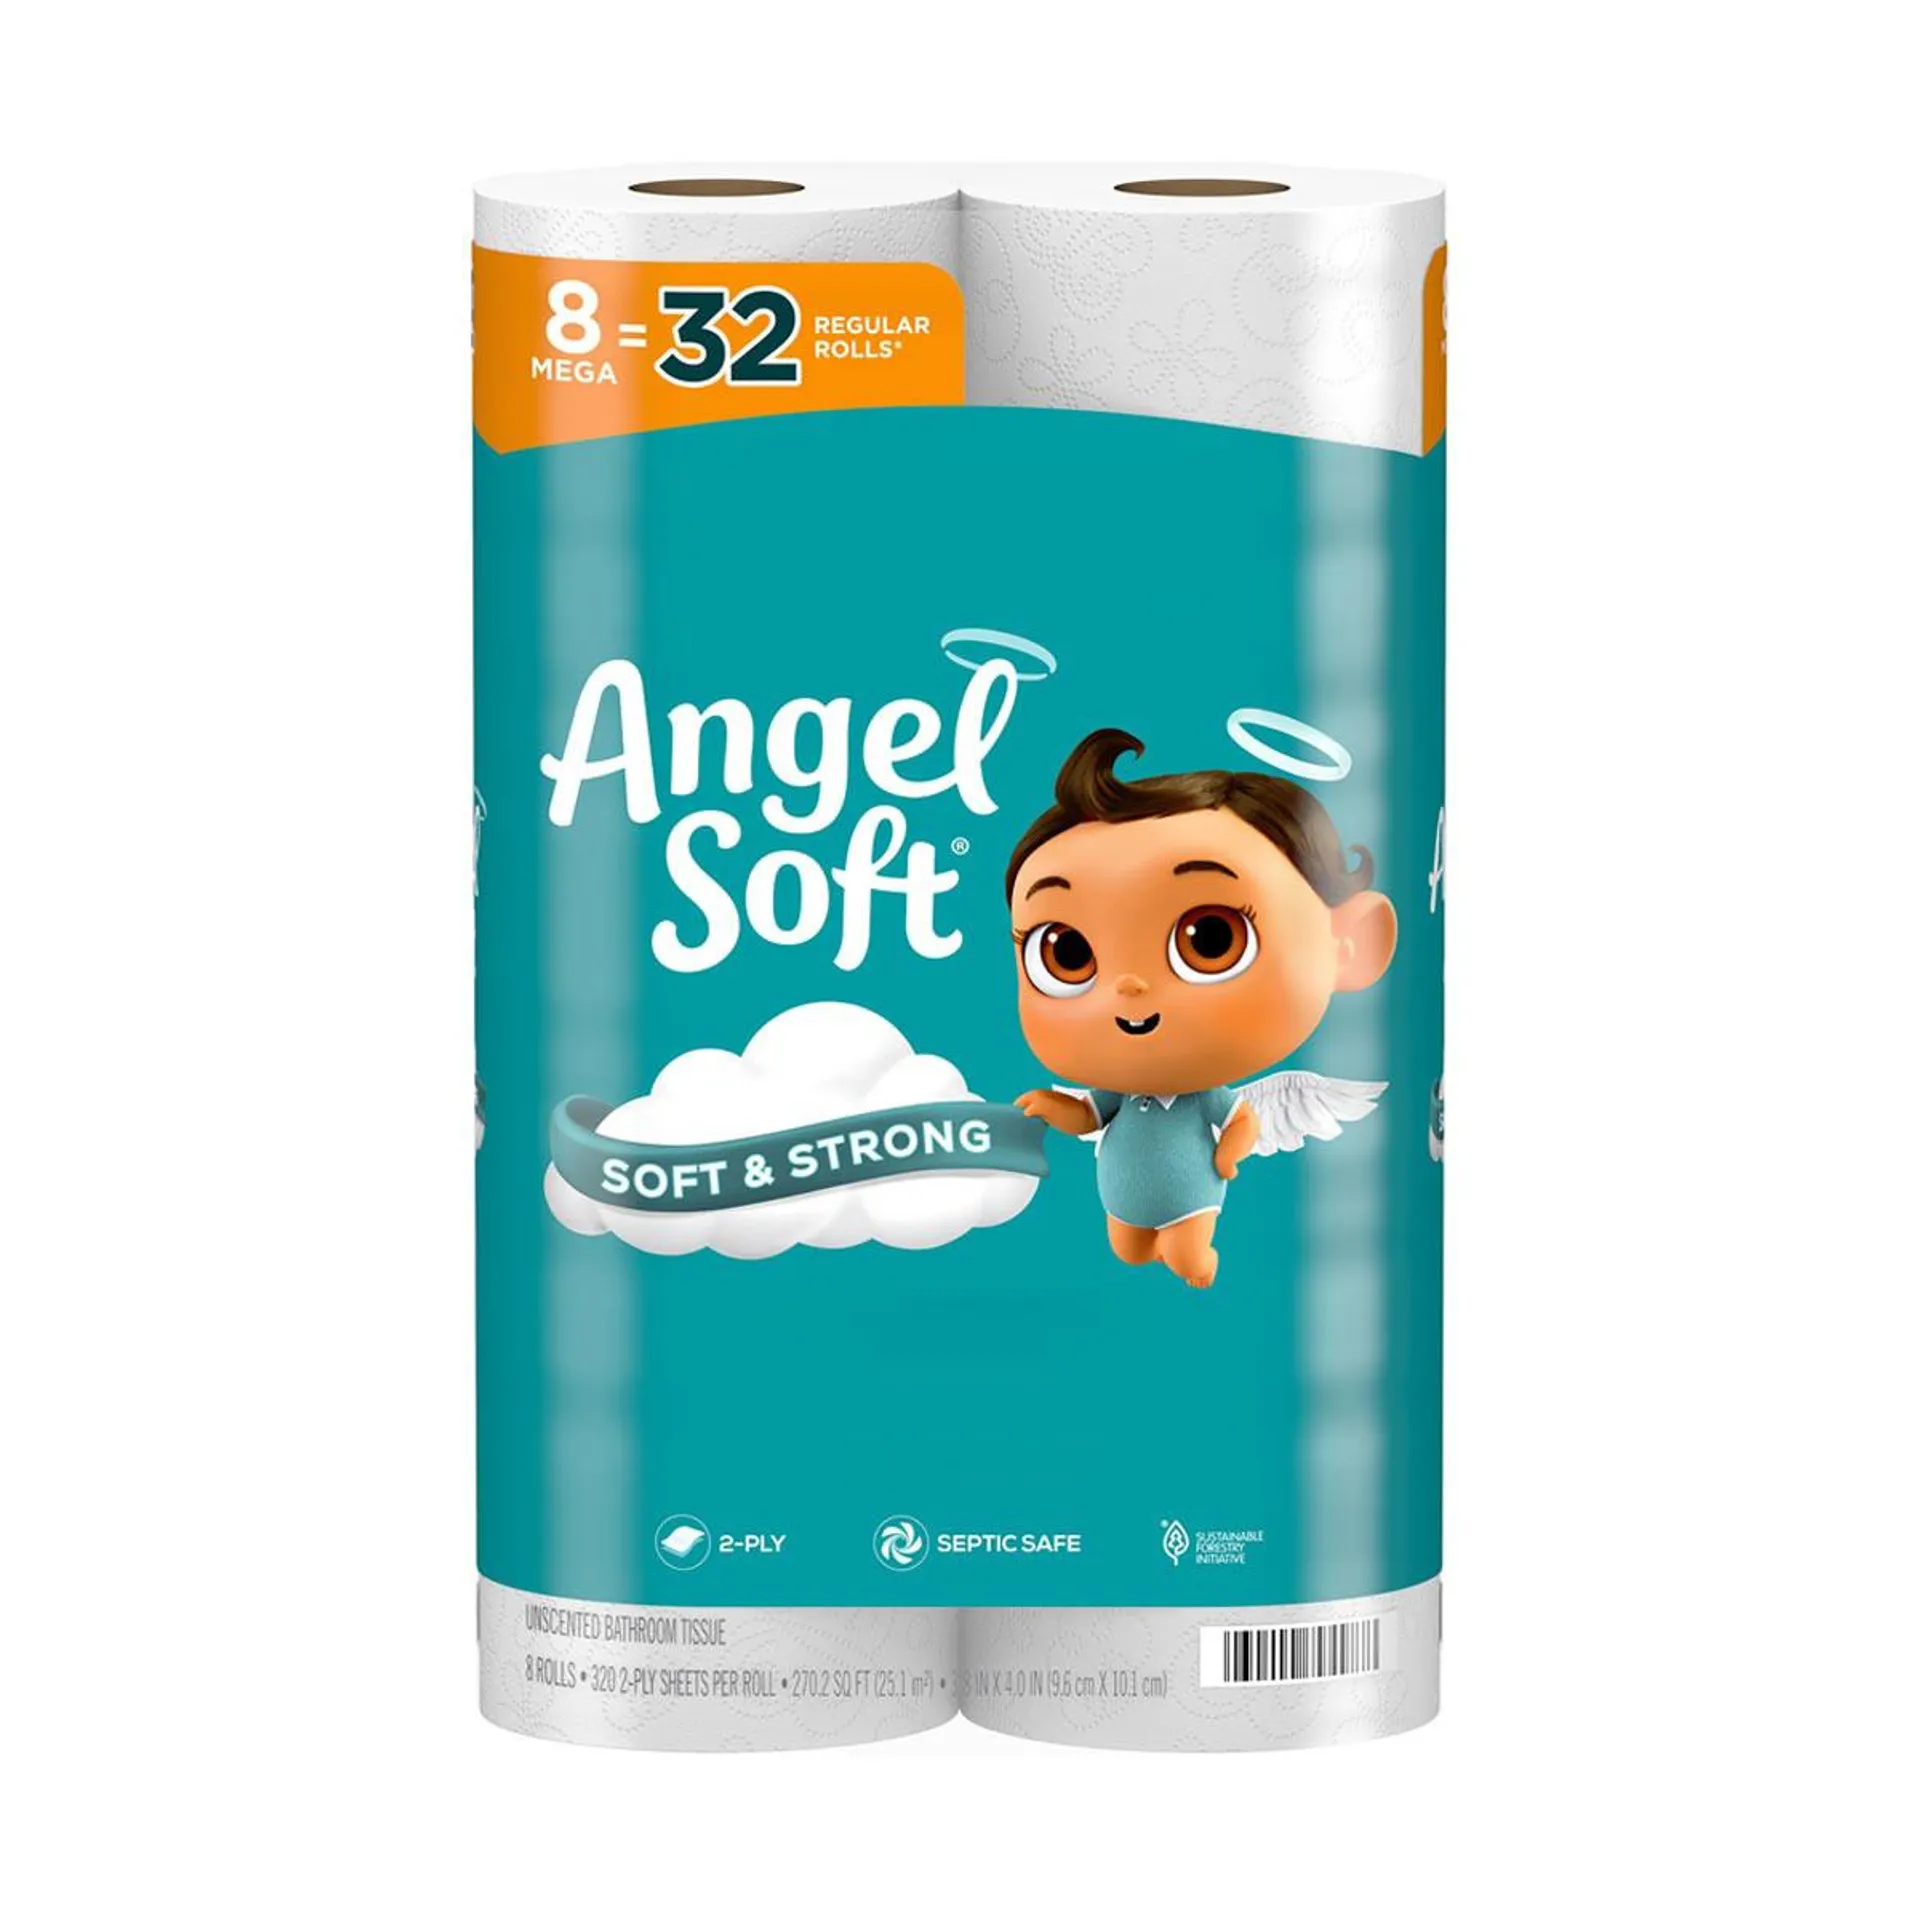 Angel Soft® Toilet Paper, 8 Mega Rolls